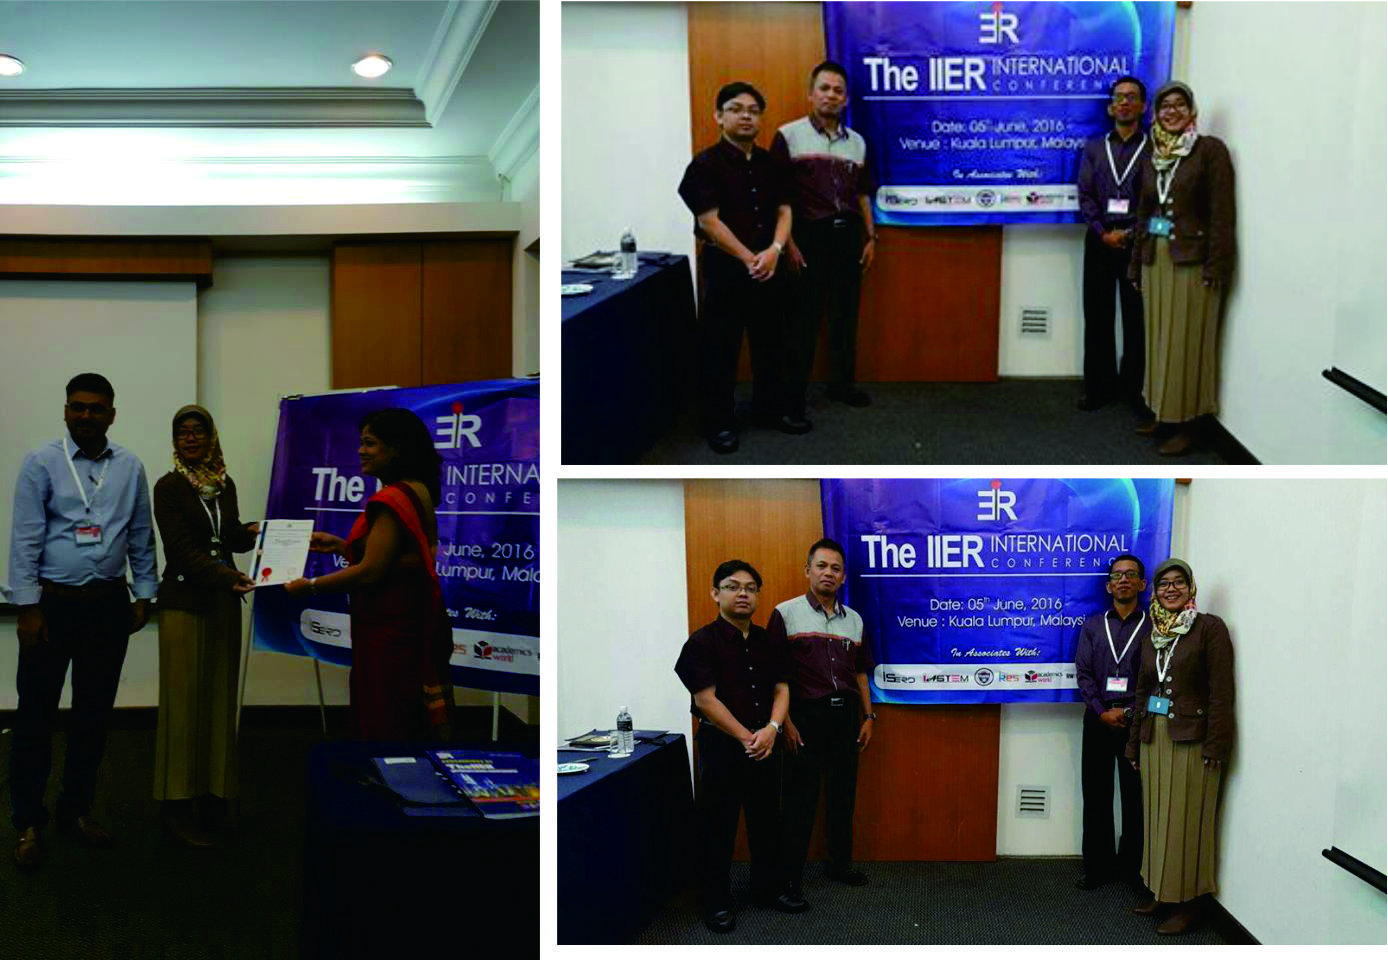 STMIK AKAKOM menjadi pemakalah pada acara 'TheIIER International Conference', Malaysia